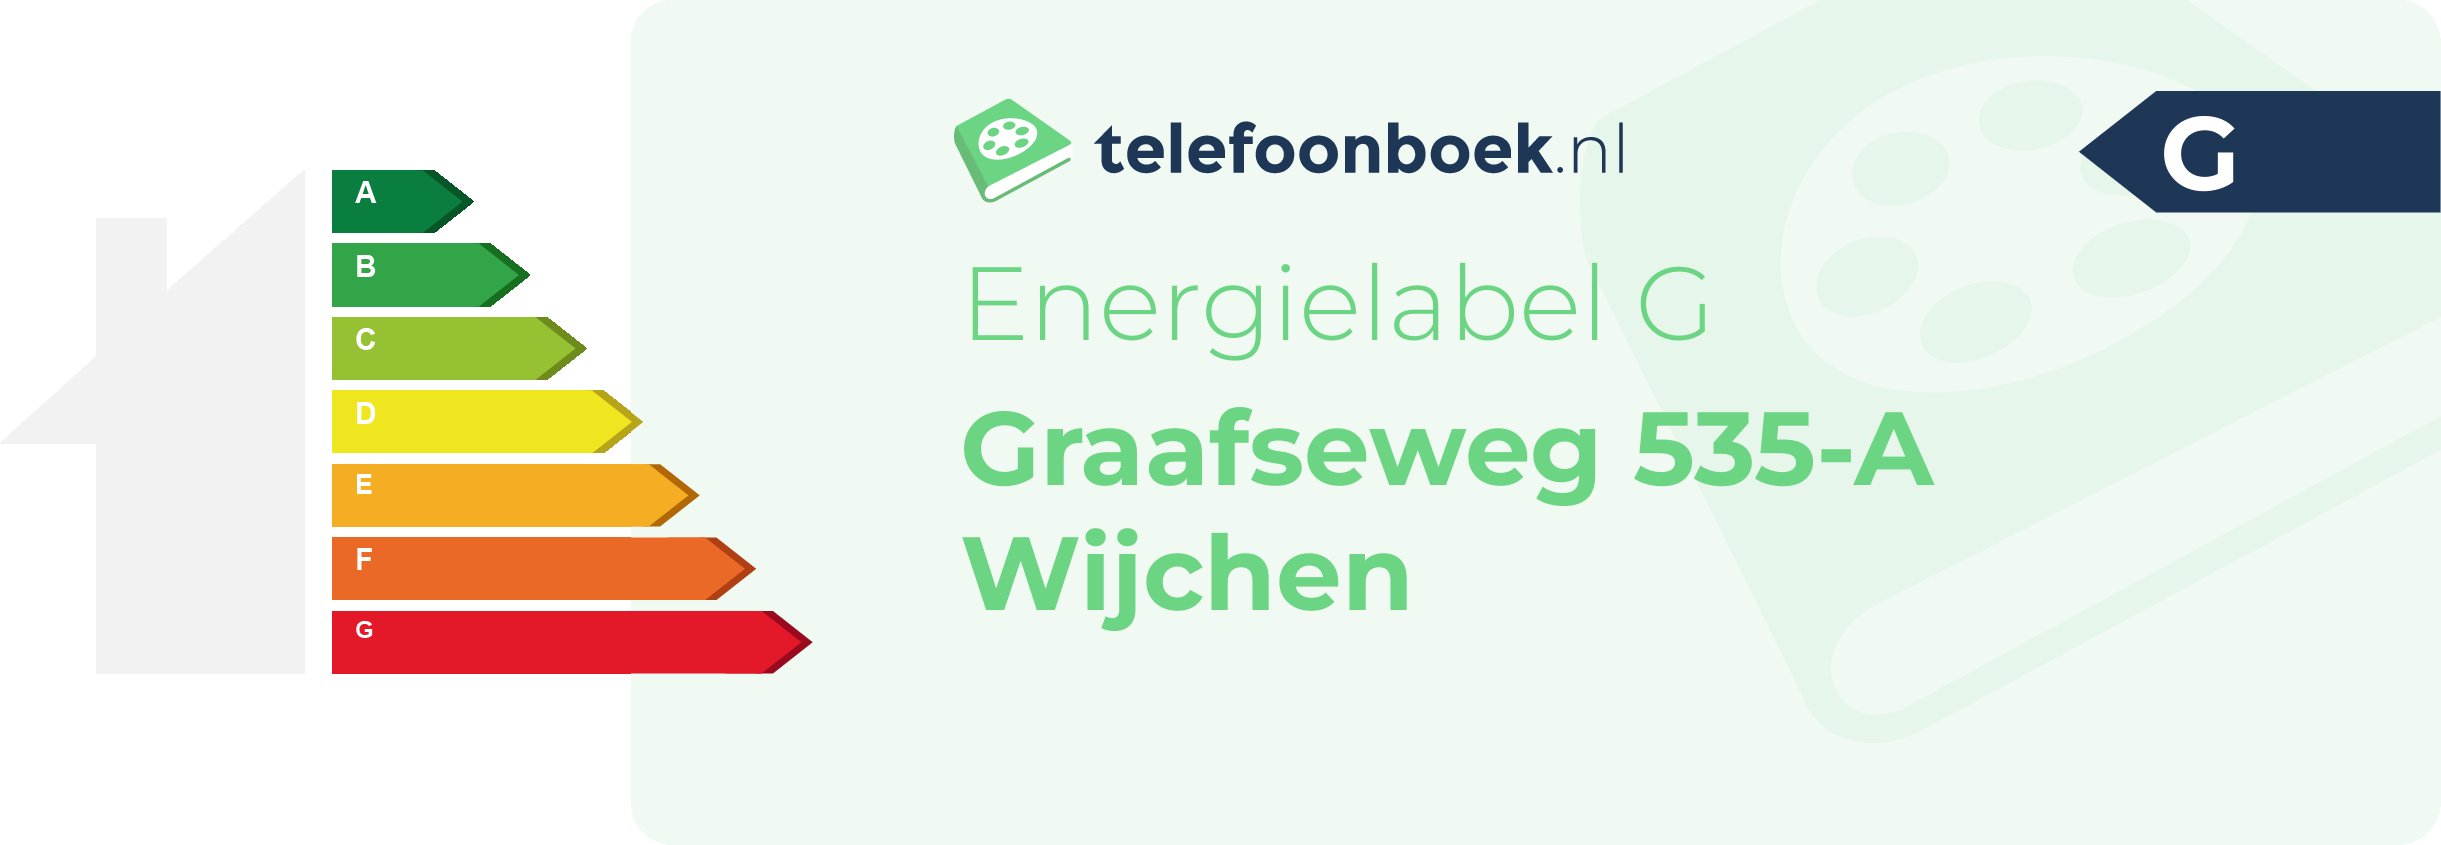 Energielabel Graafseweg 535-A Wijchen